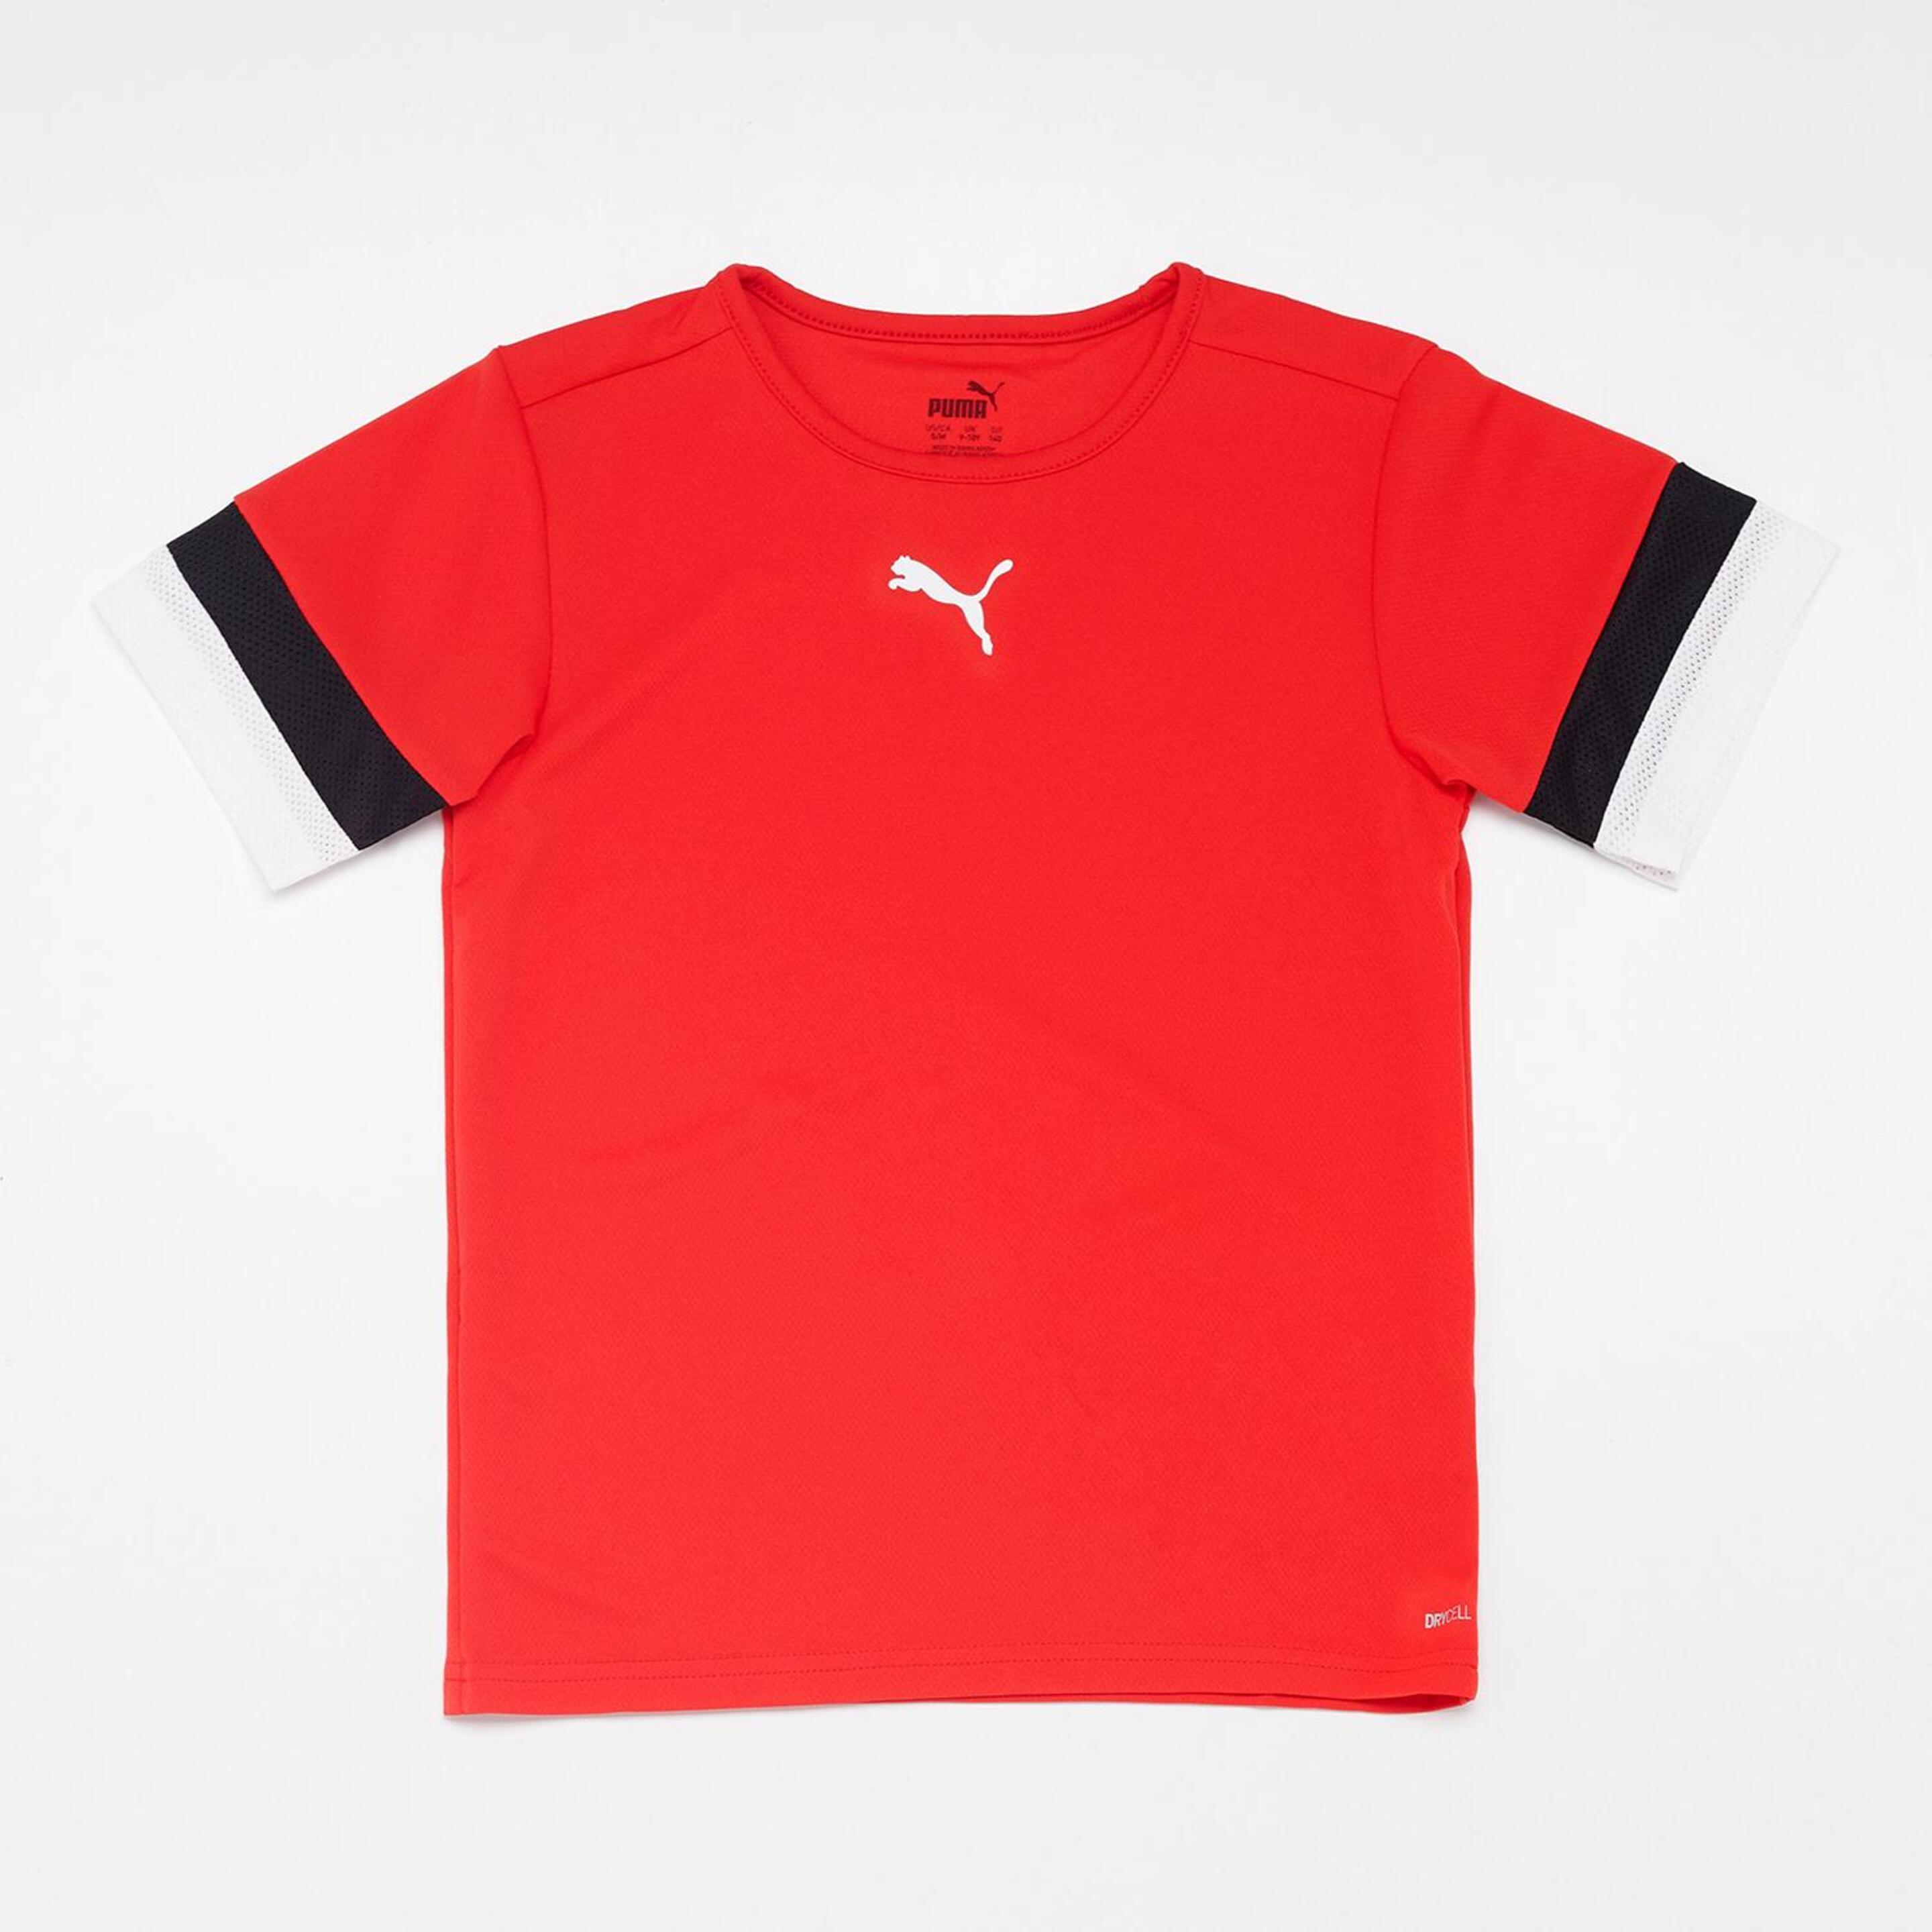 Puma Teamrise - rojo - Camiseta Futbol Niñ@s